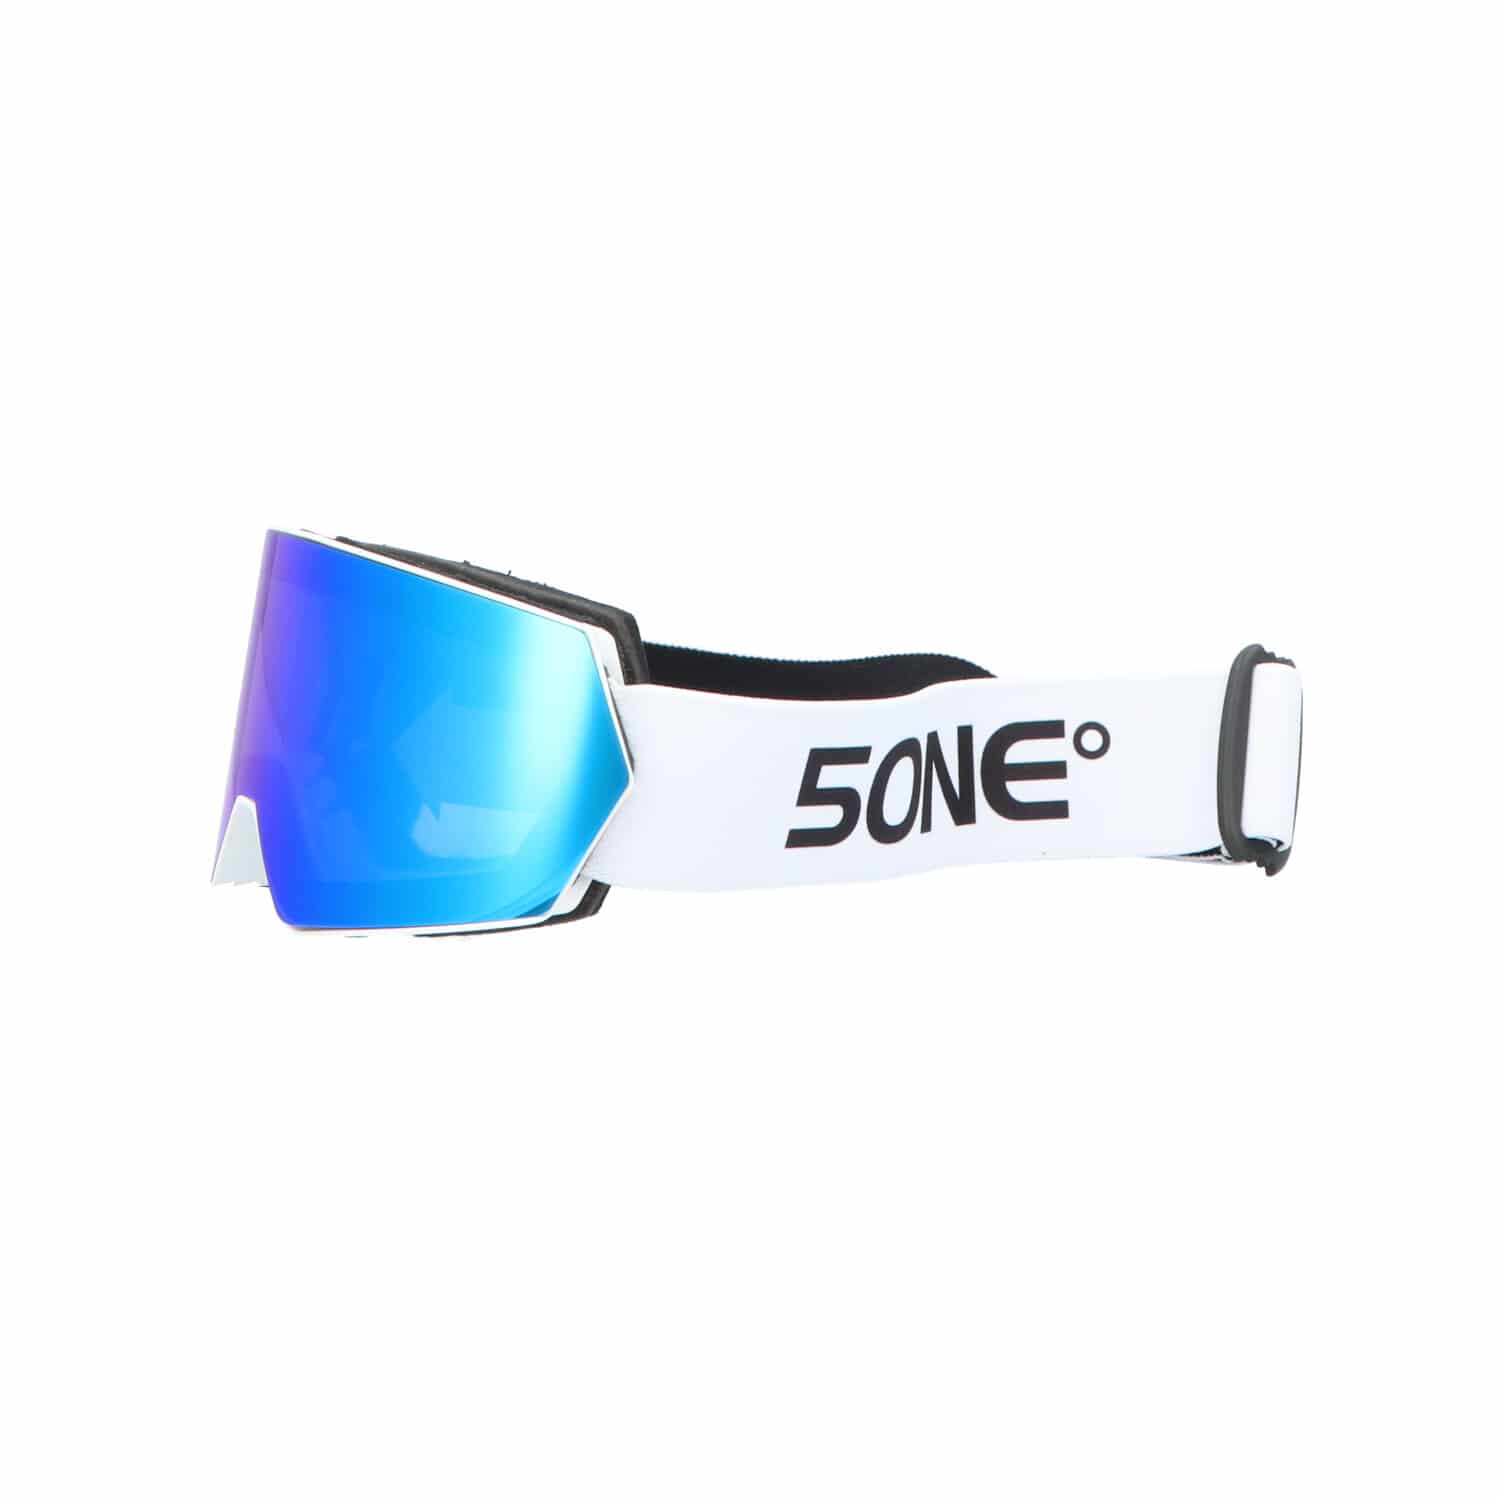 5one® Skibril Alpine 6 Bleu Raspbery Medium Skibril met wit montuur met 3 lenzen